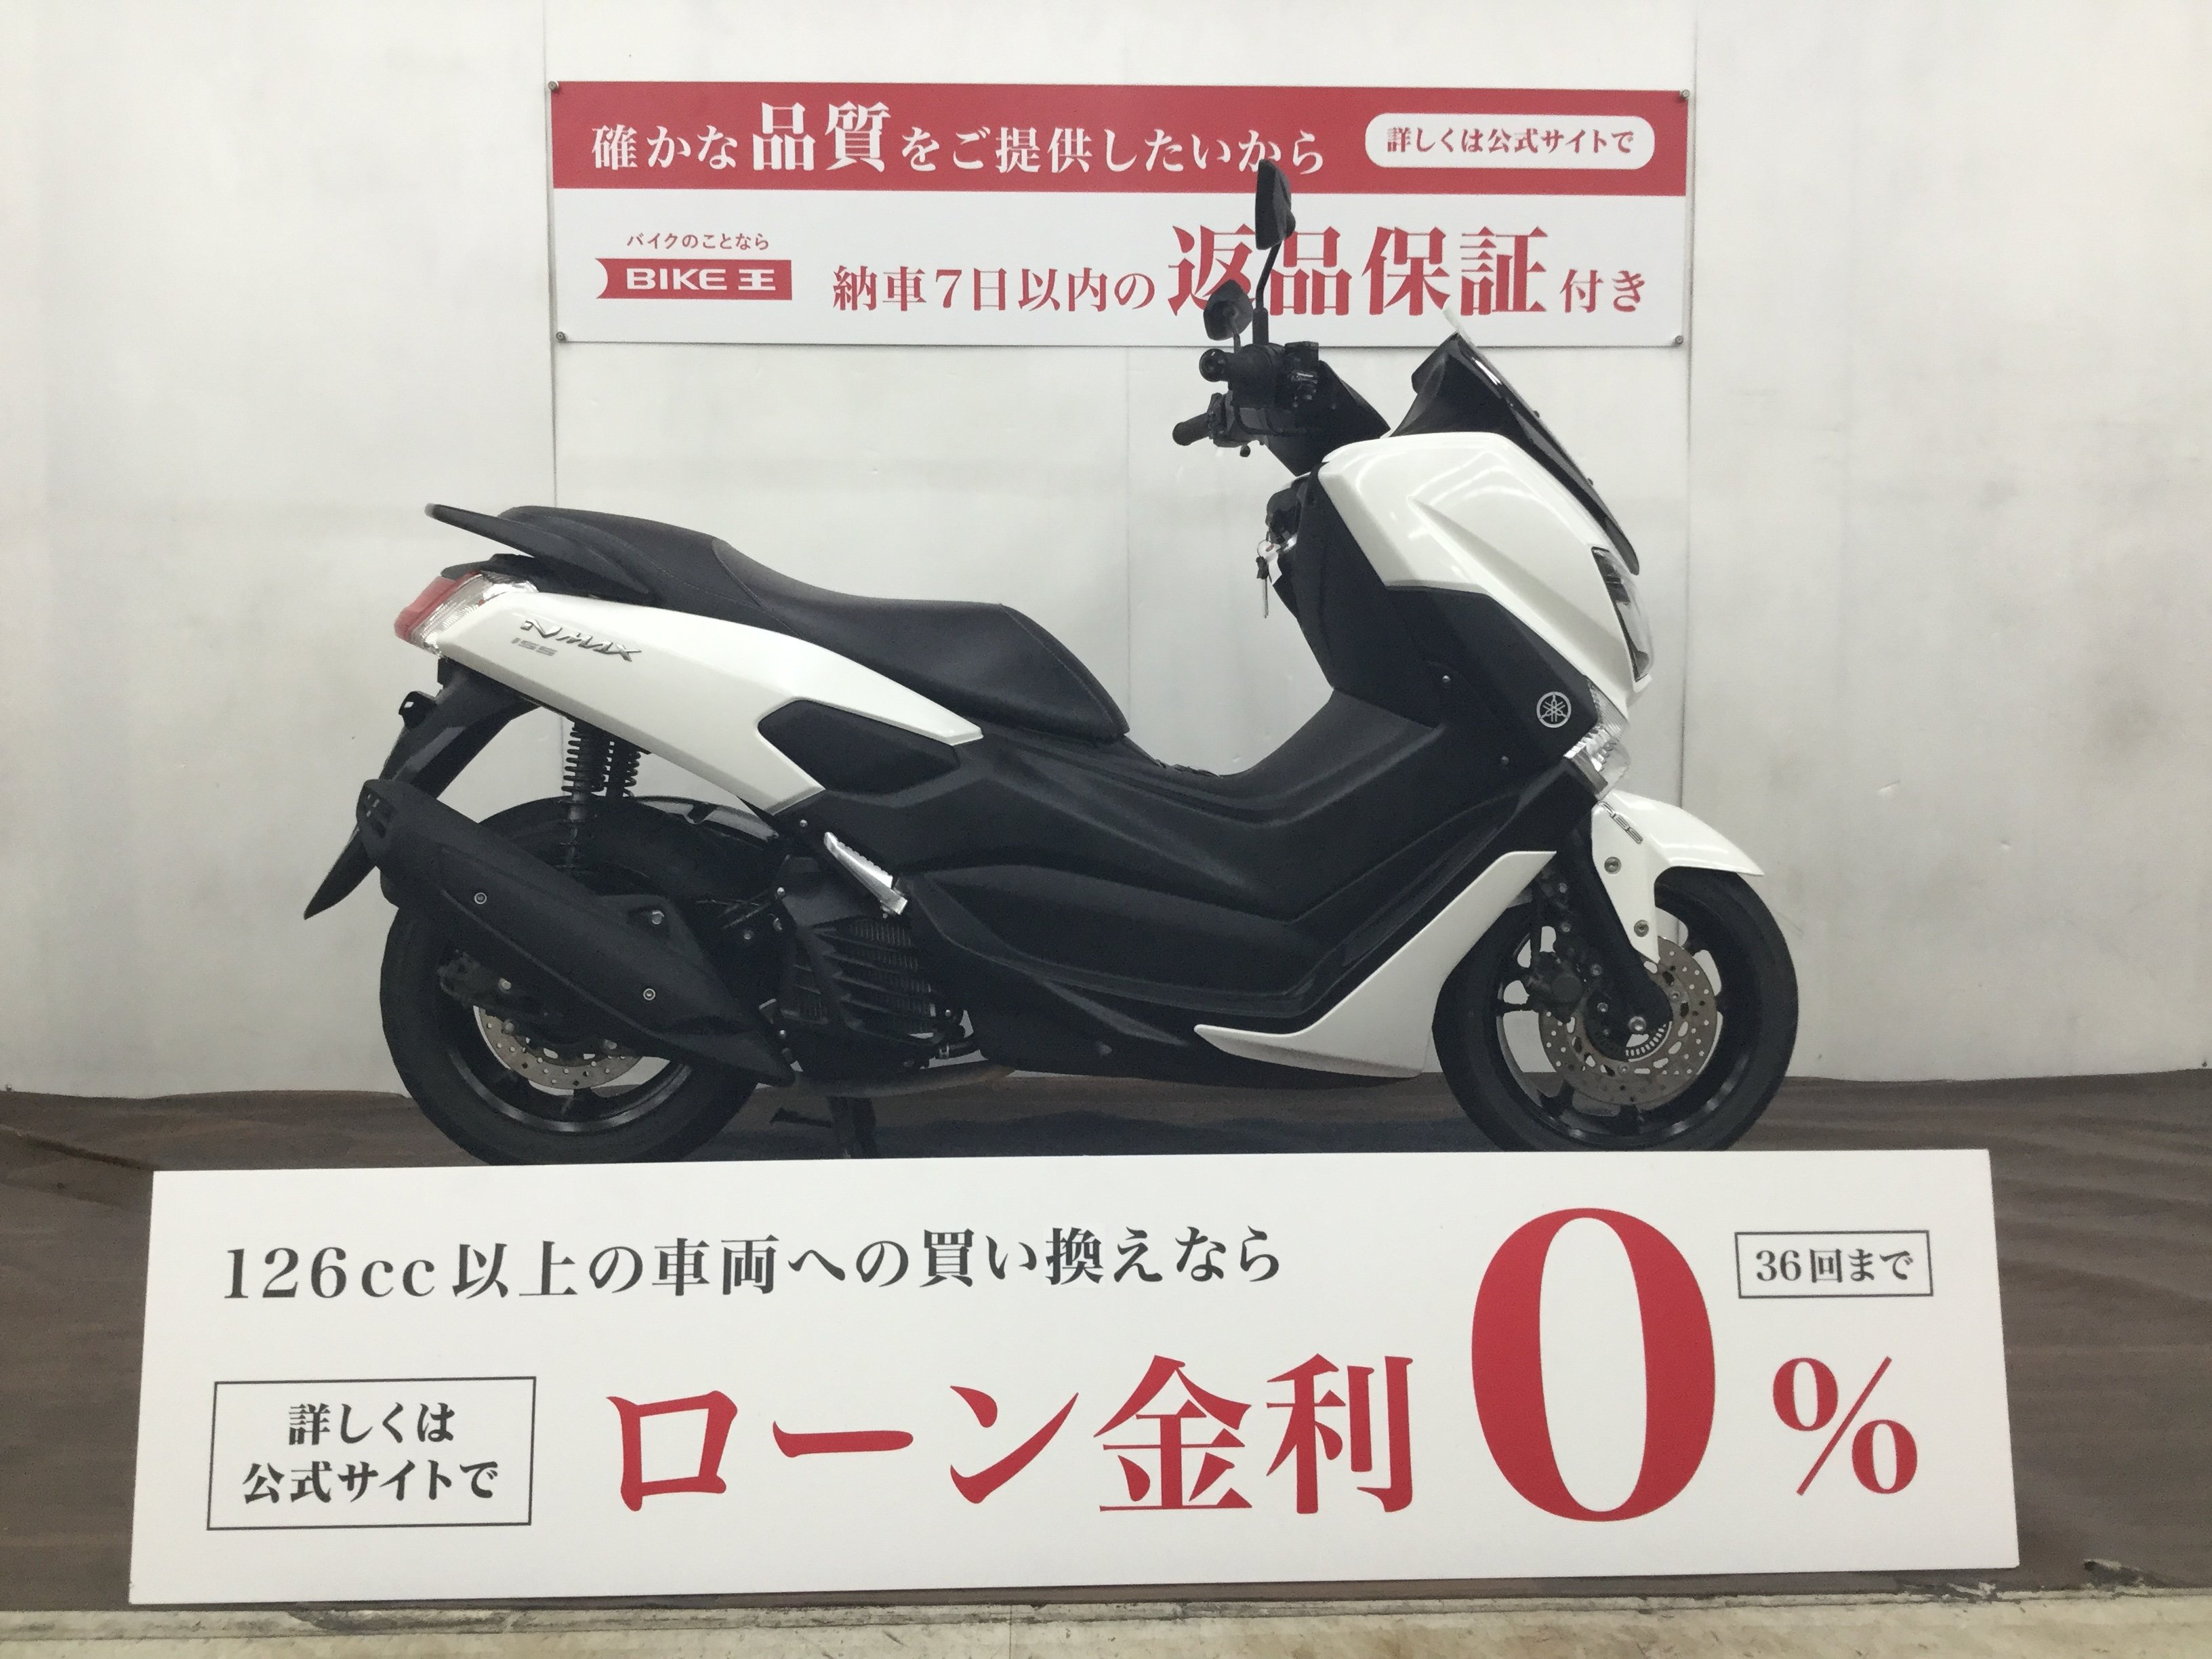 NMAX155 SG50J型 自動車専用道路走行OK☆ | バイク買うなら【バイク王】